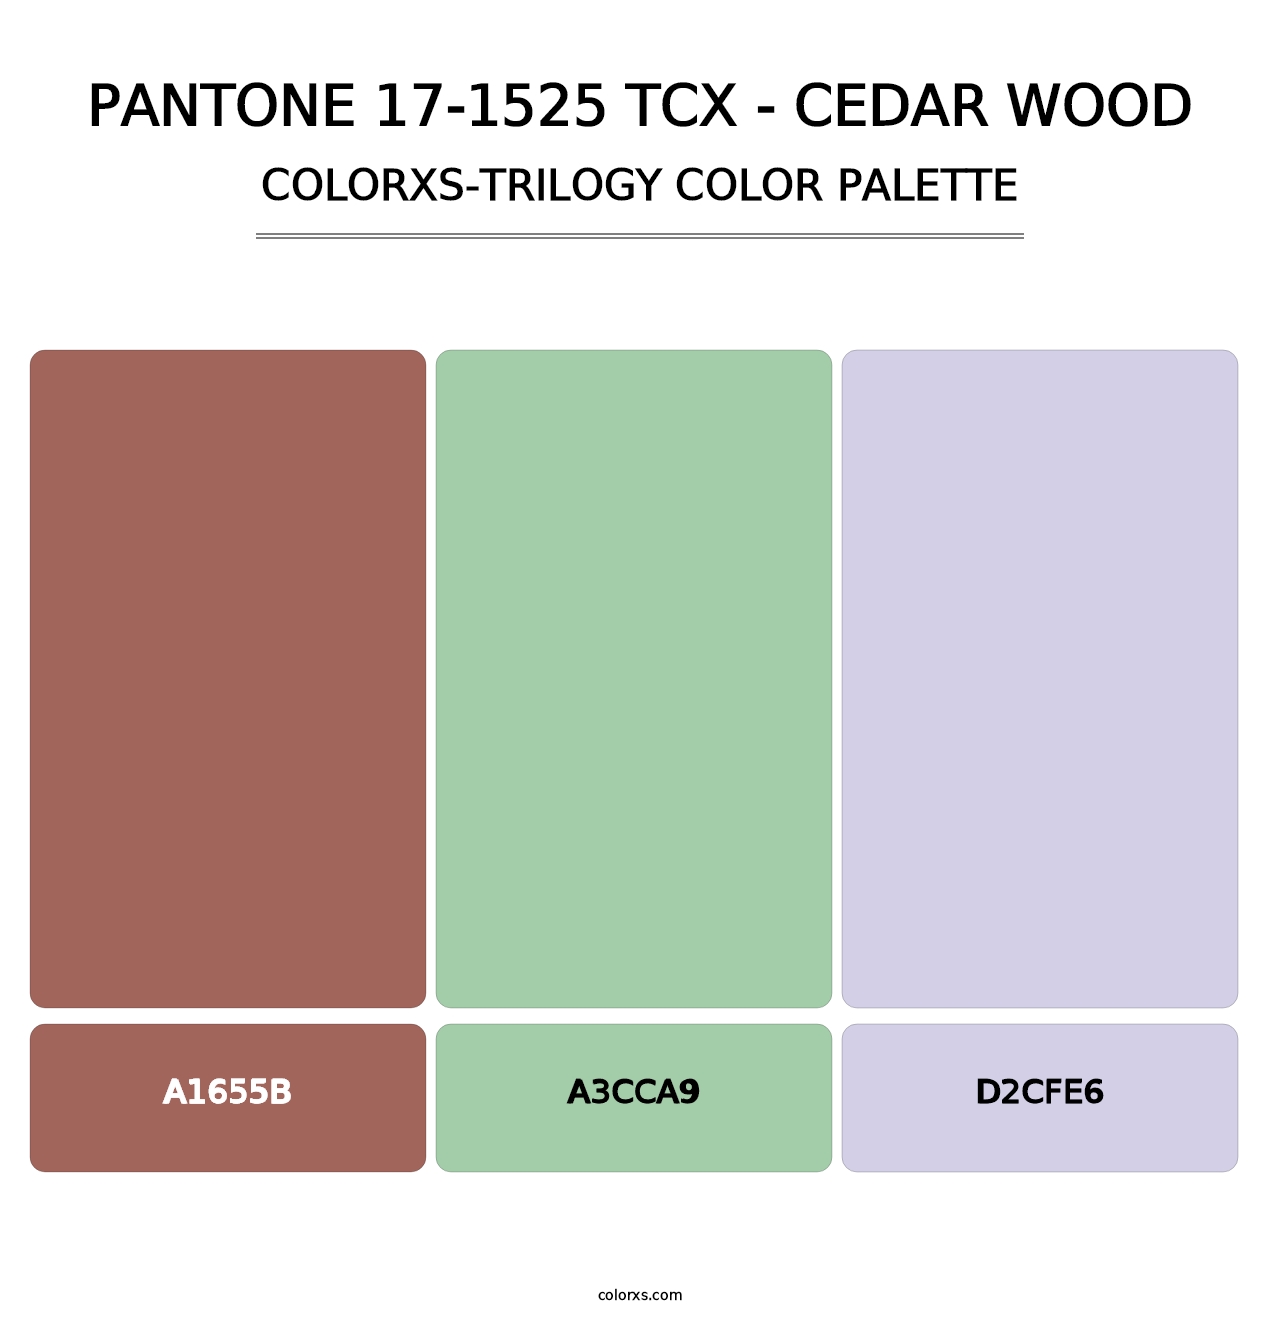 PANTONE 17-1525 TCX - Cedar Wood - Colorxs Trilogy Palette